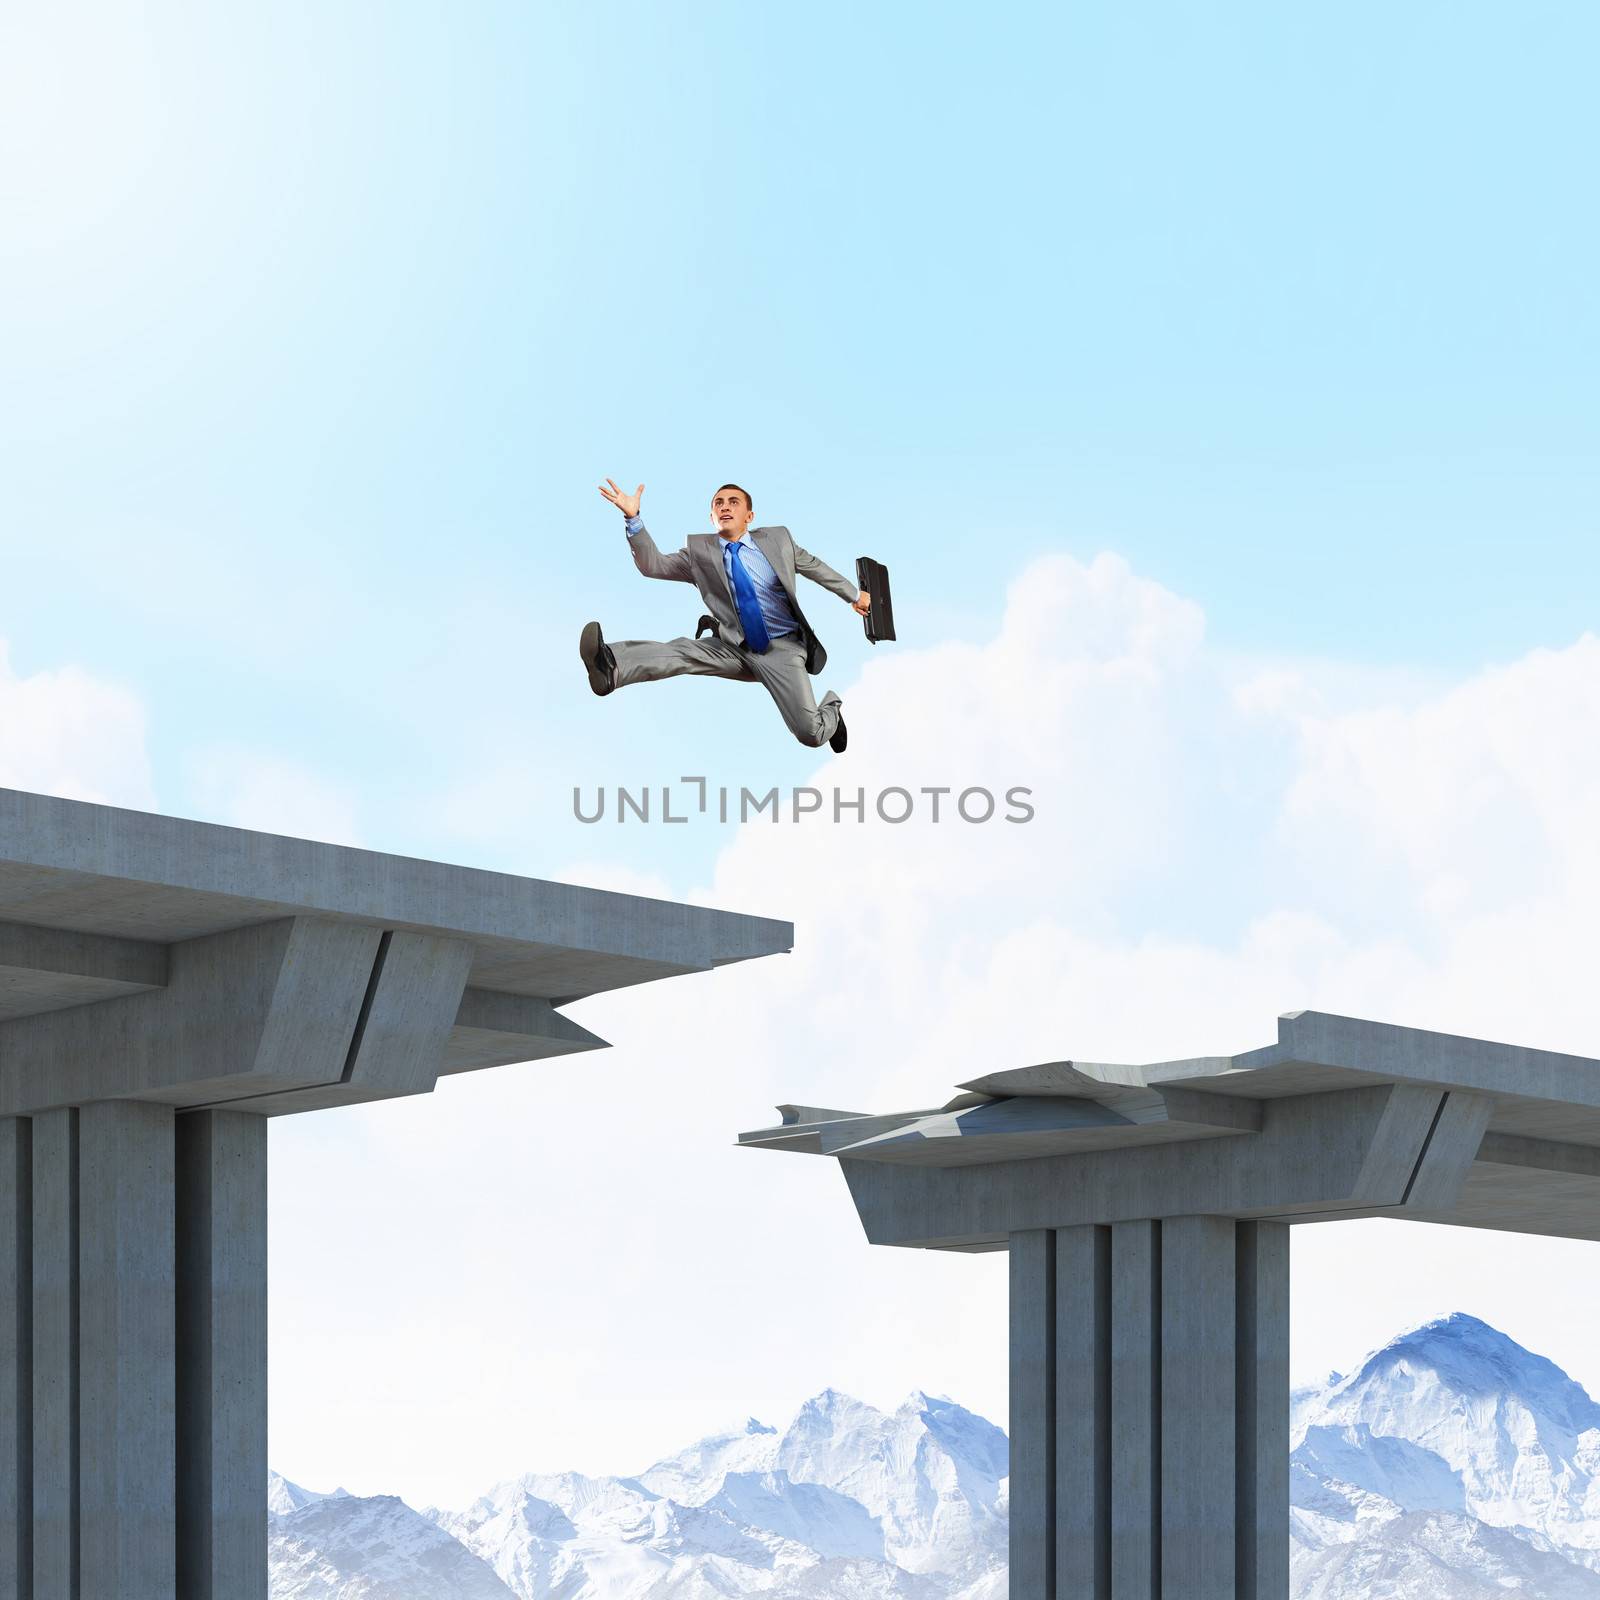 Businessman jumping over a gap in the bridge as a symbol of bridge